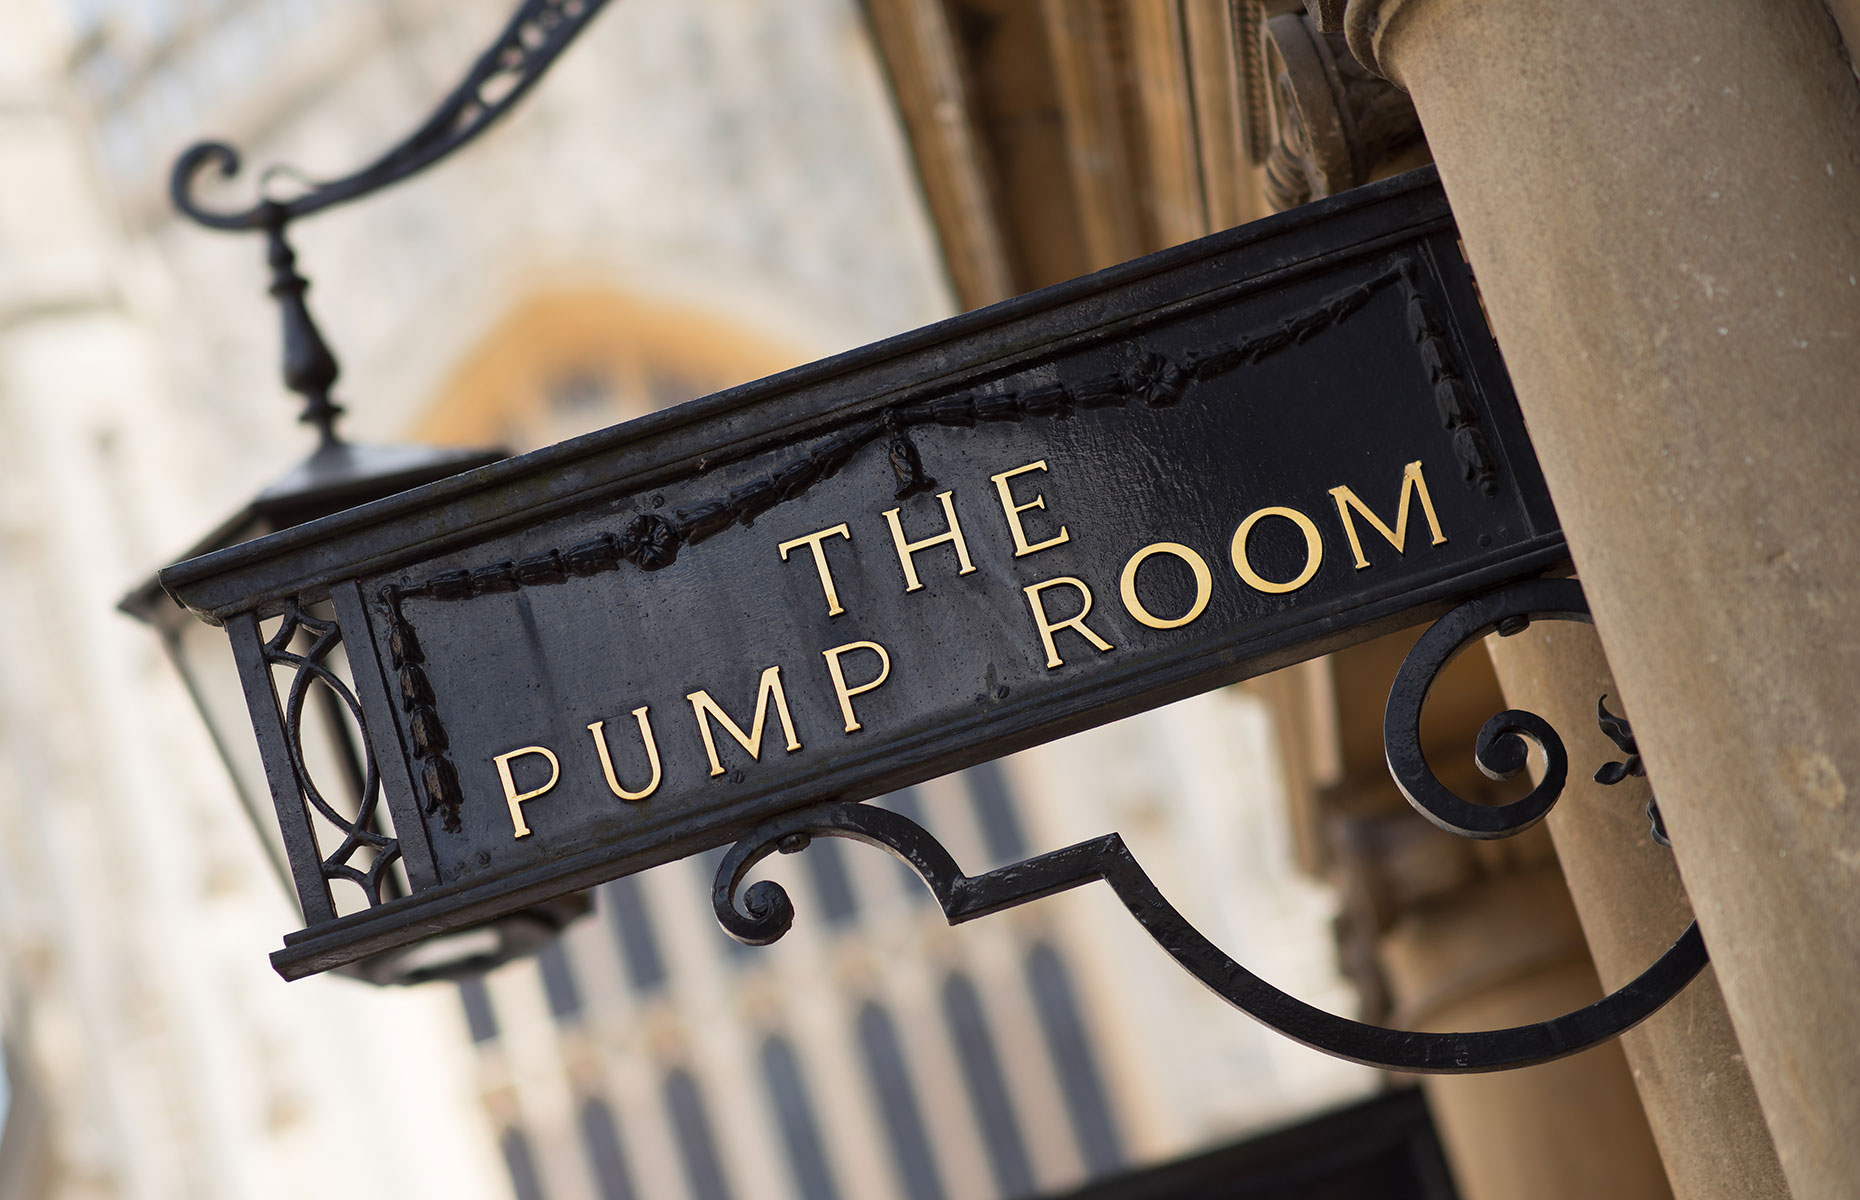 The Pump Room, Bath